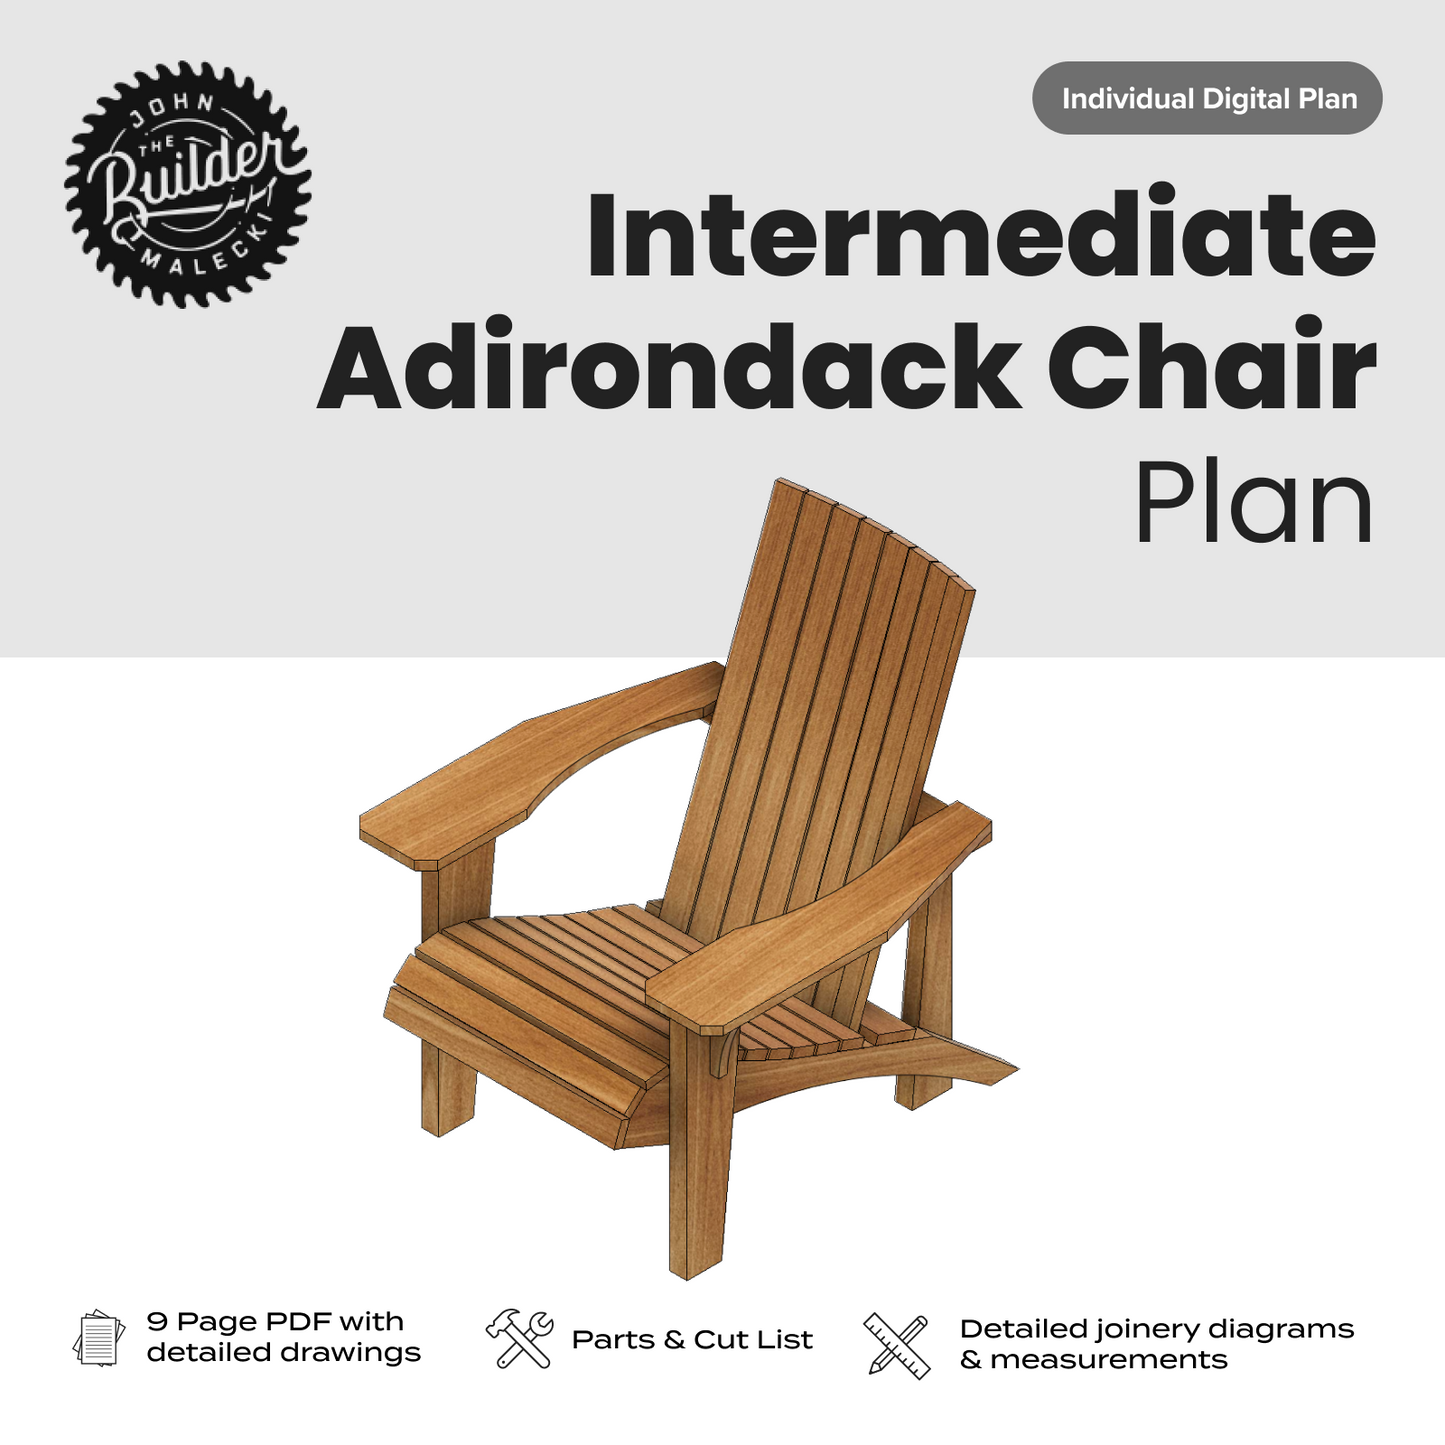 John Malecki - Intermediate DIY Adirondack Chair Plan